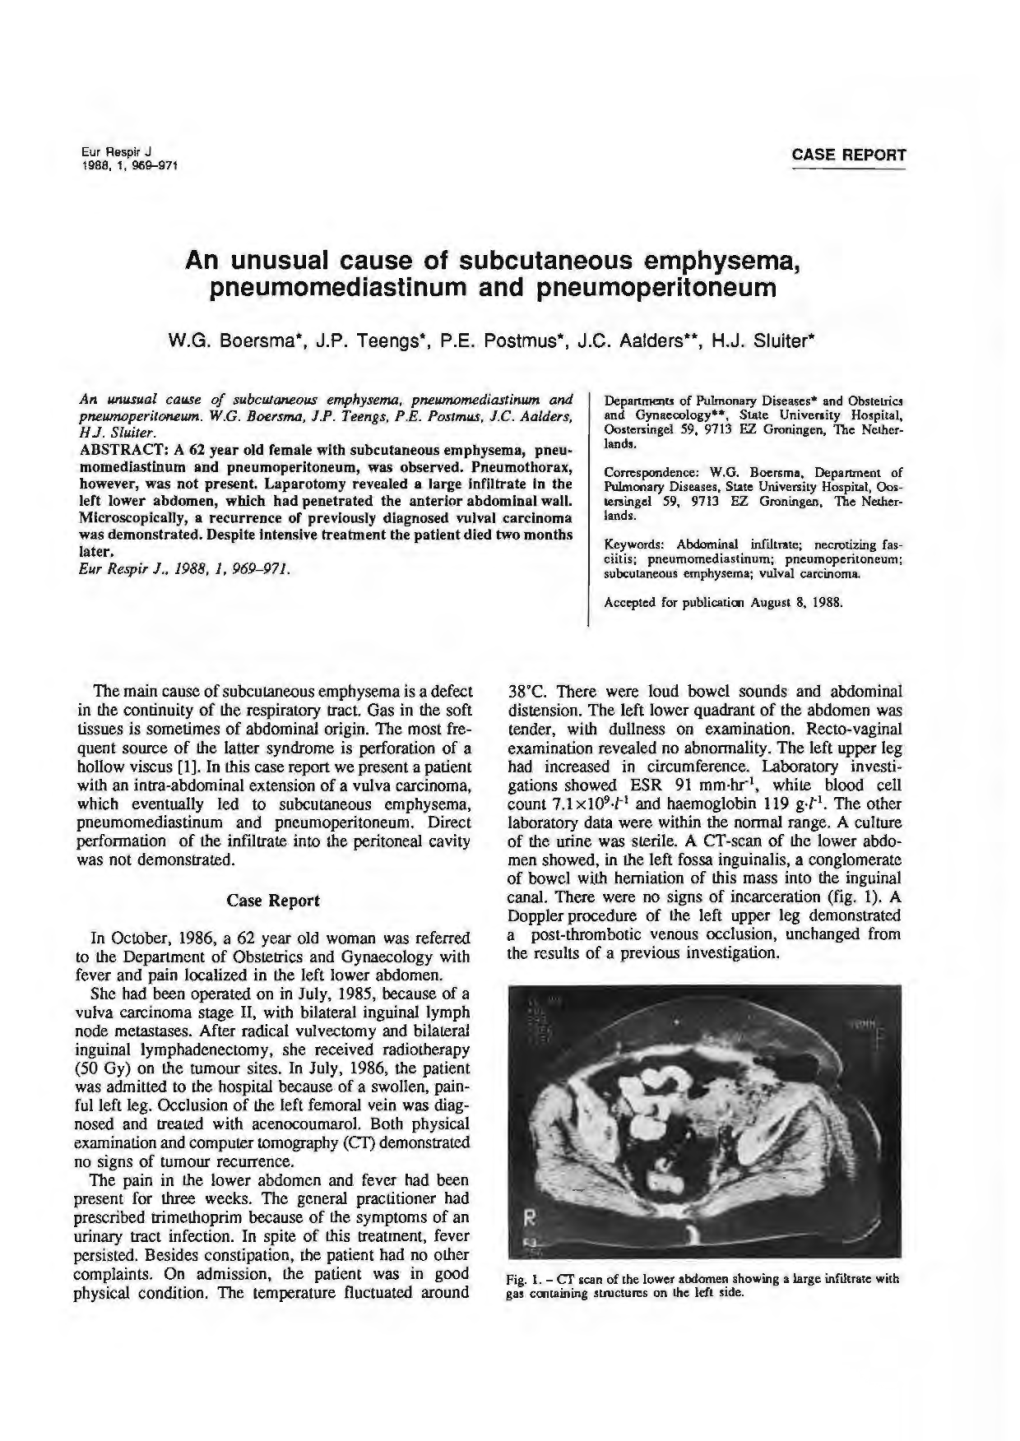 An Unusual Cause of Subcutaneous Emphysema, Pneumomediastinum and Pneumoperitoneum